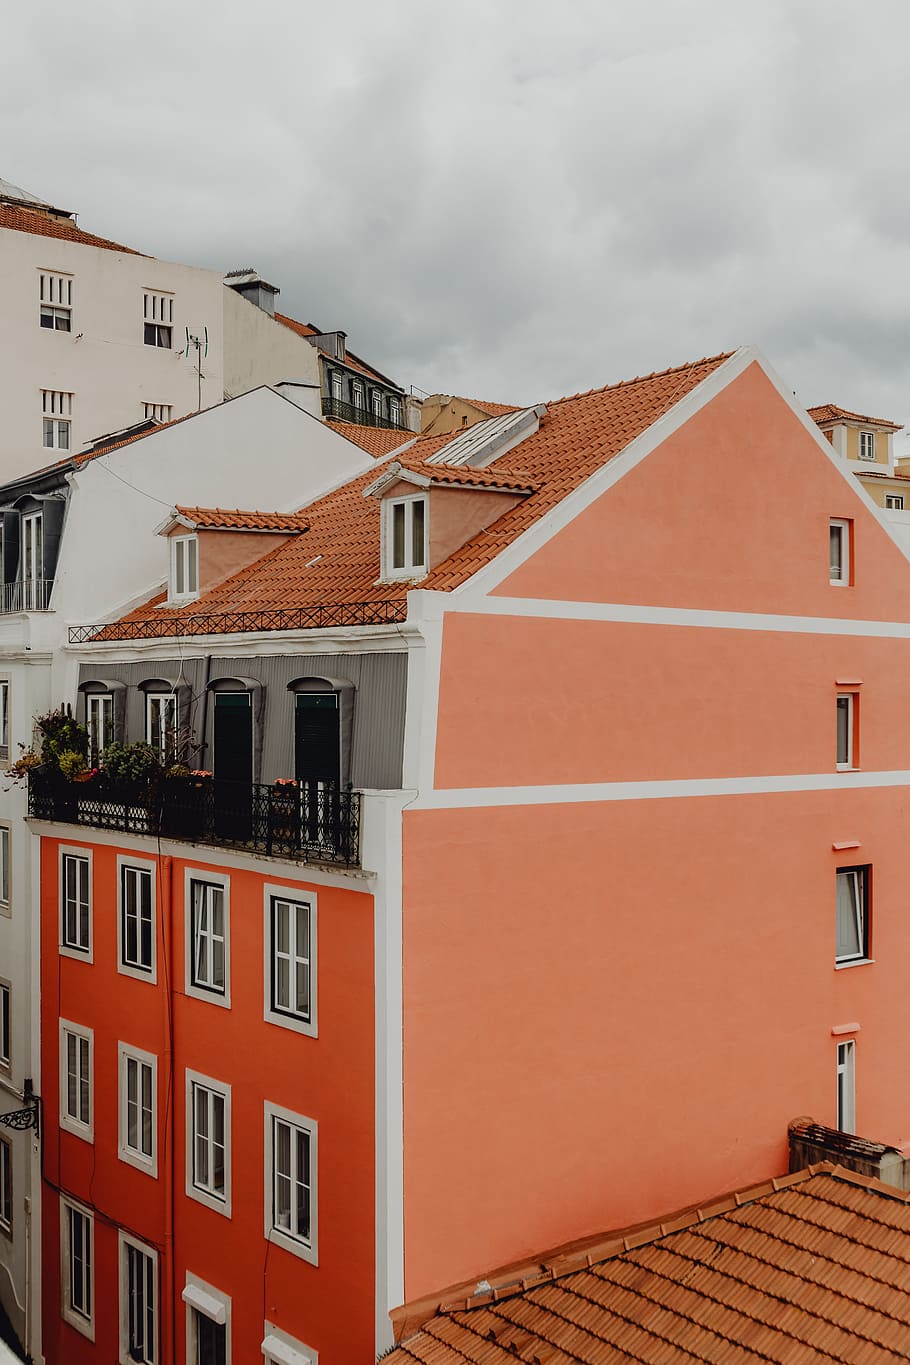 lisbon architecture, portugal, architecture, buildings, town, city, Europe, facade, colorful, portugal, lisbon